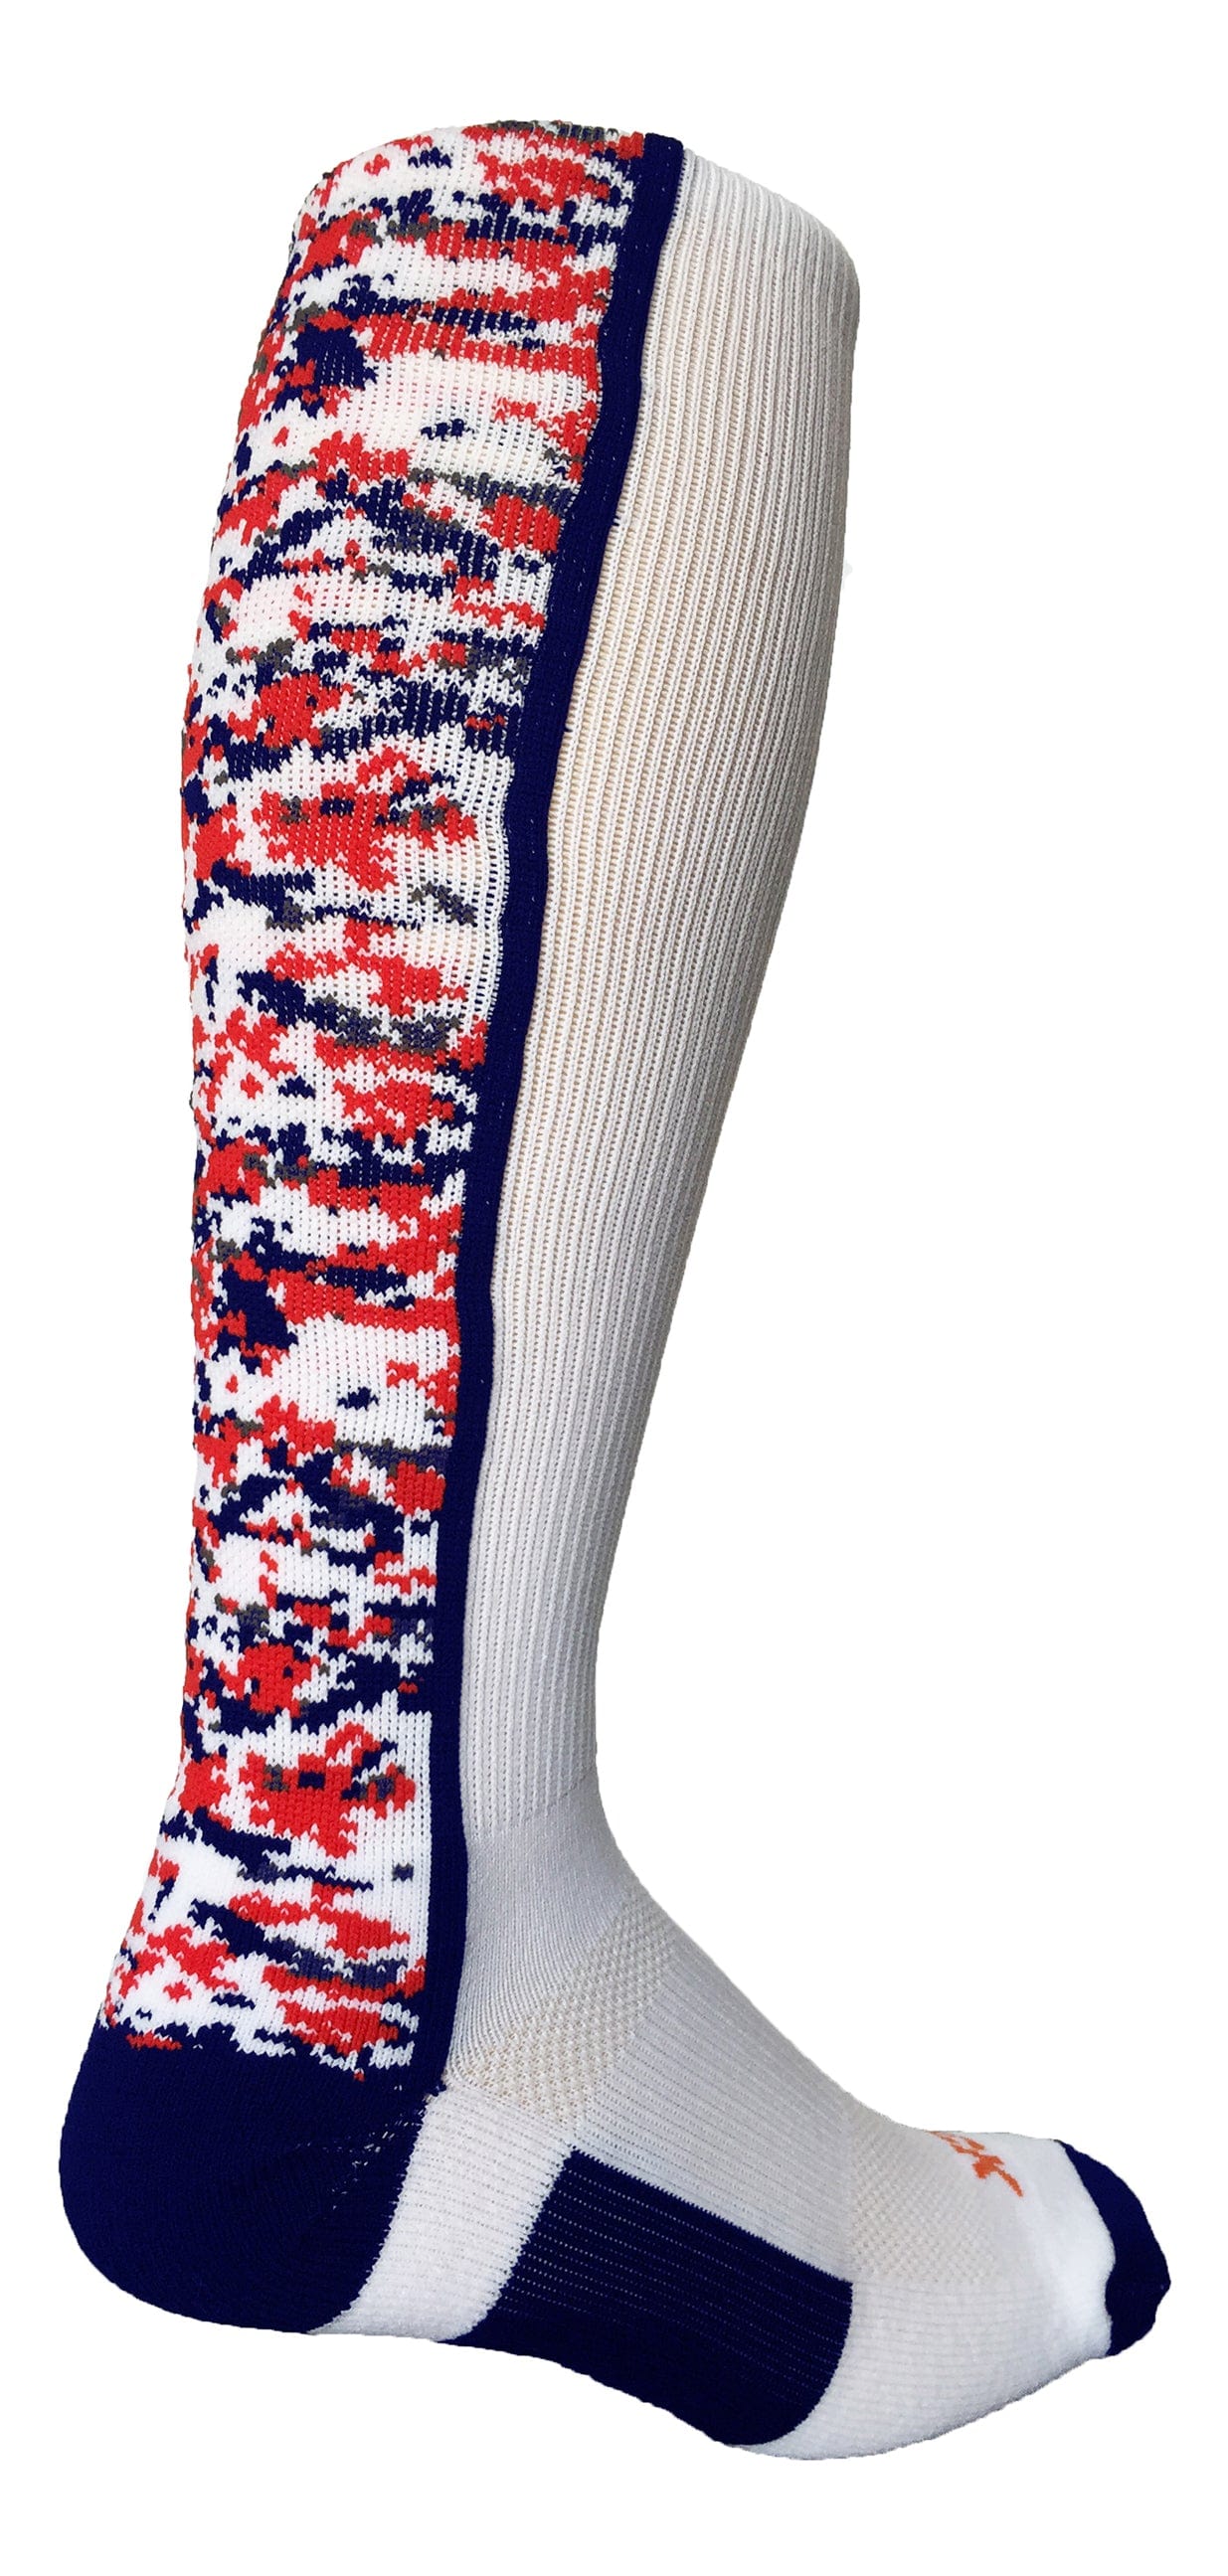 Over the Calf Camo Socks For Football & Baseball – MadSportsStuff